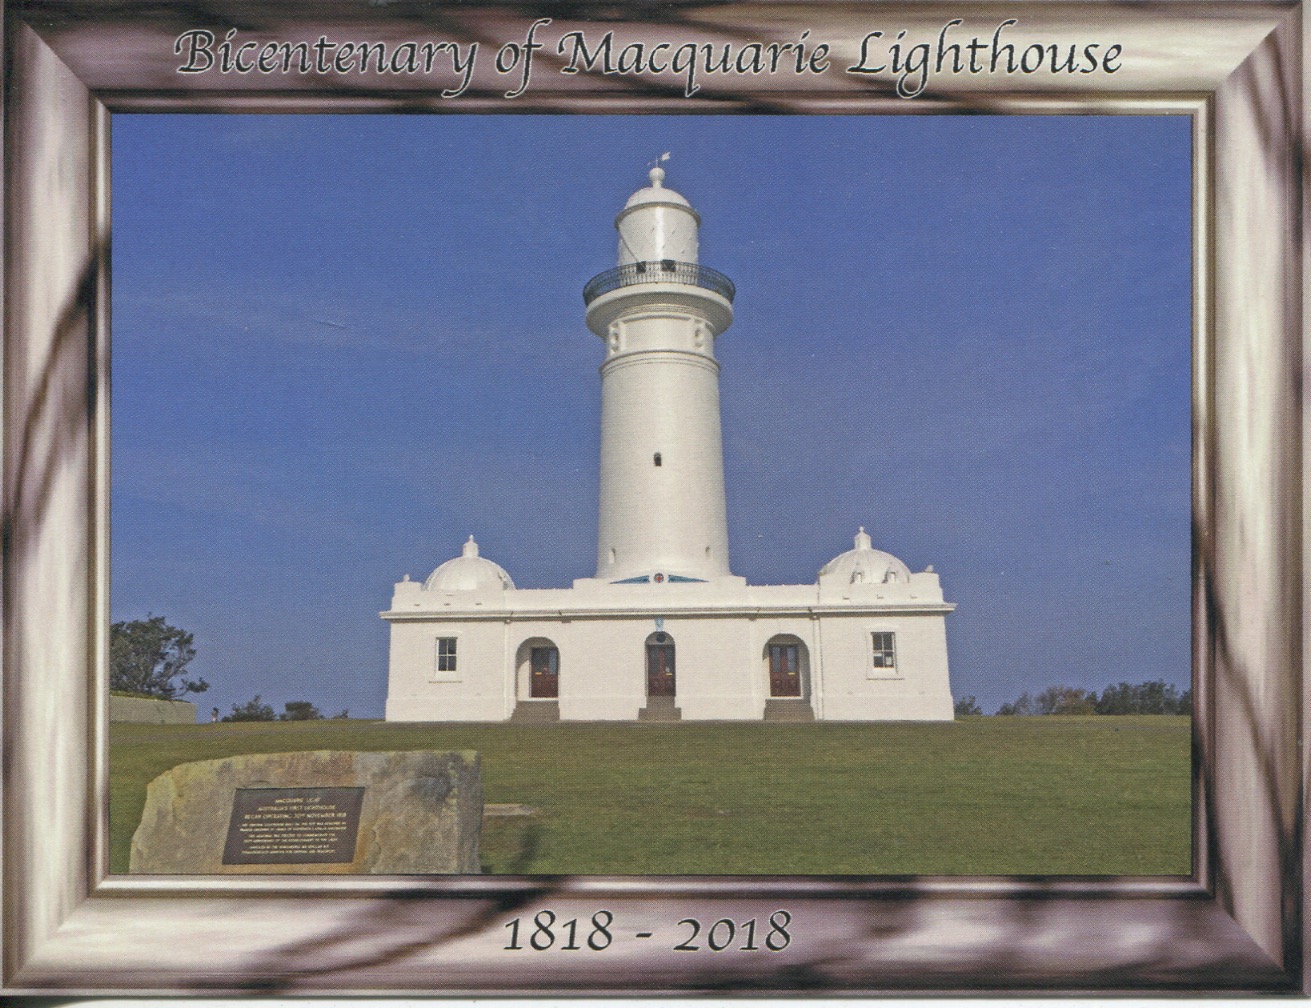 Bicentenary of Macquarie Lighthouse (NSW - Australia)